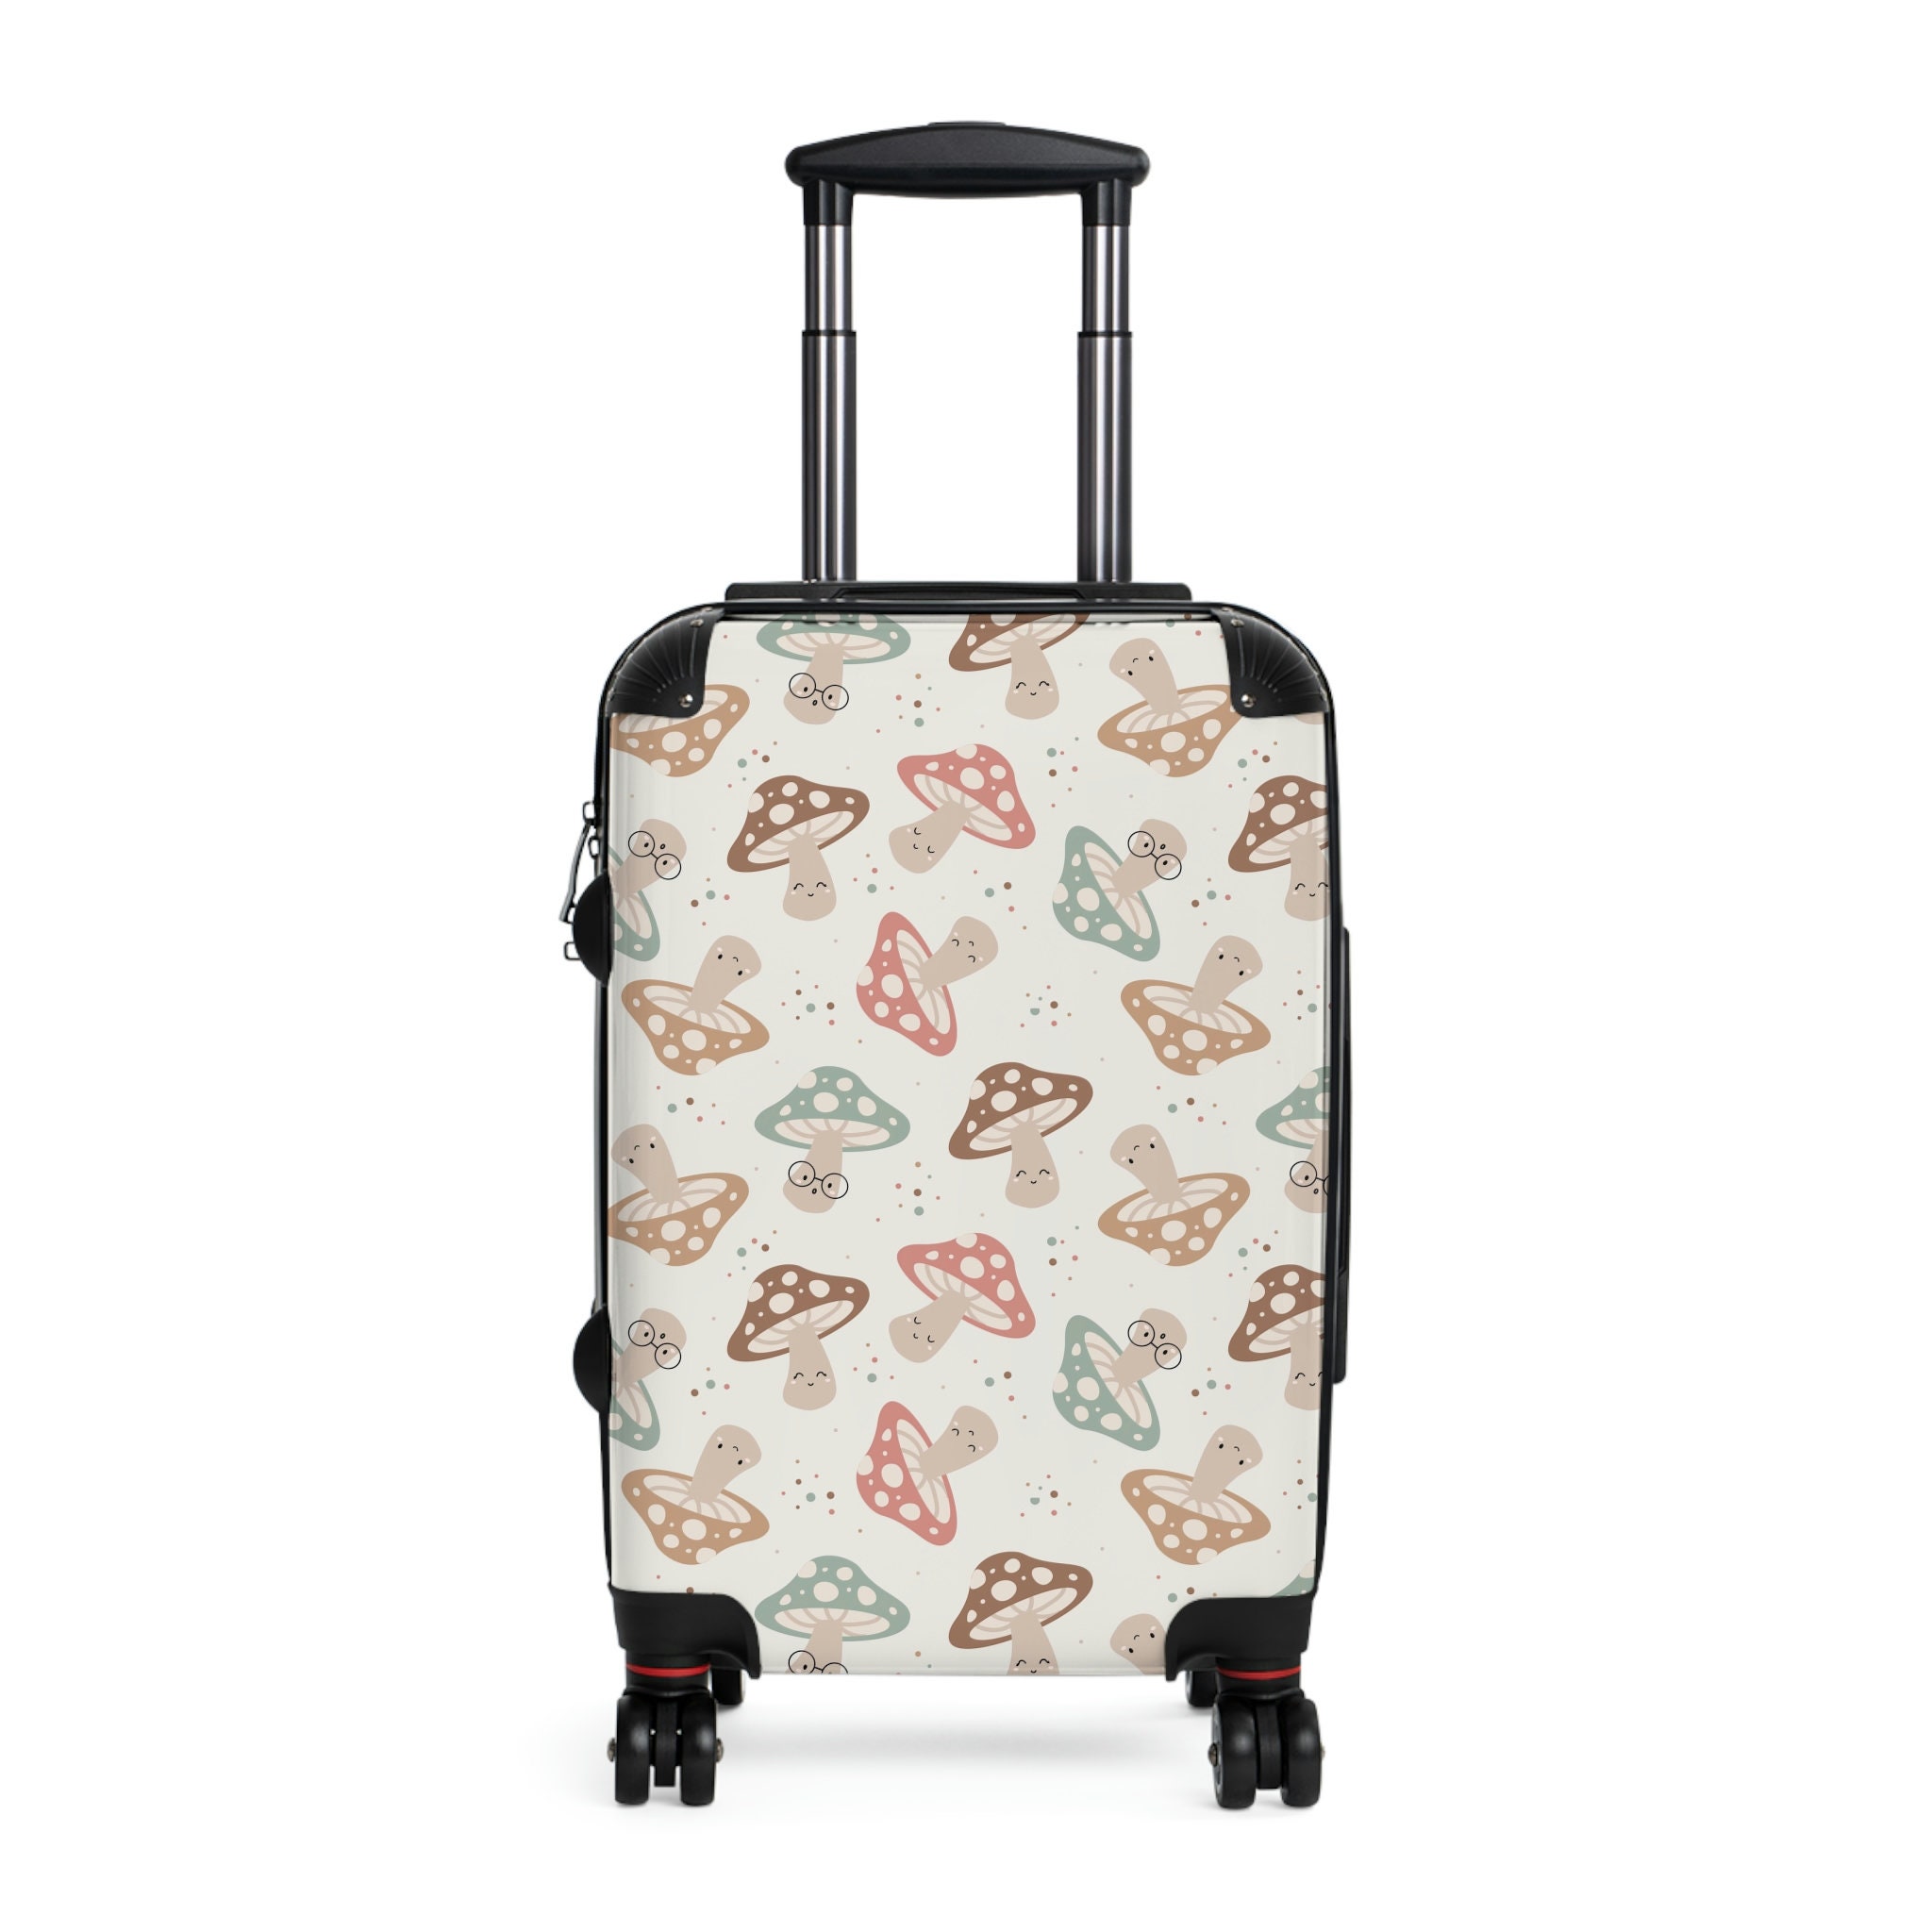 Mushroom Suitcase, Cute Mushrooms Suitcase